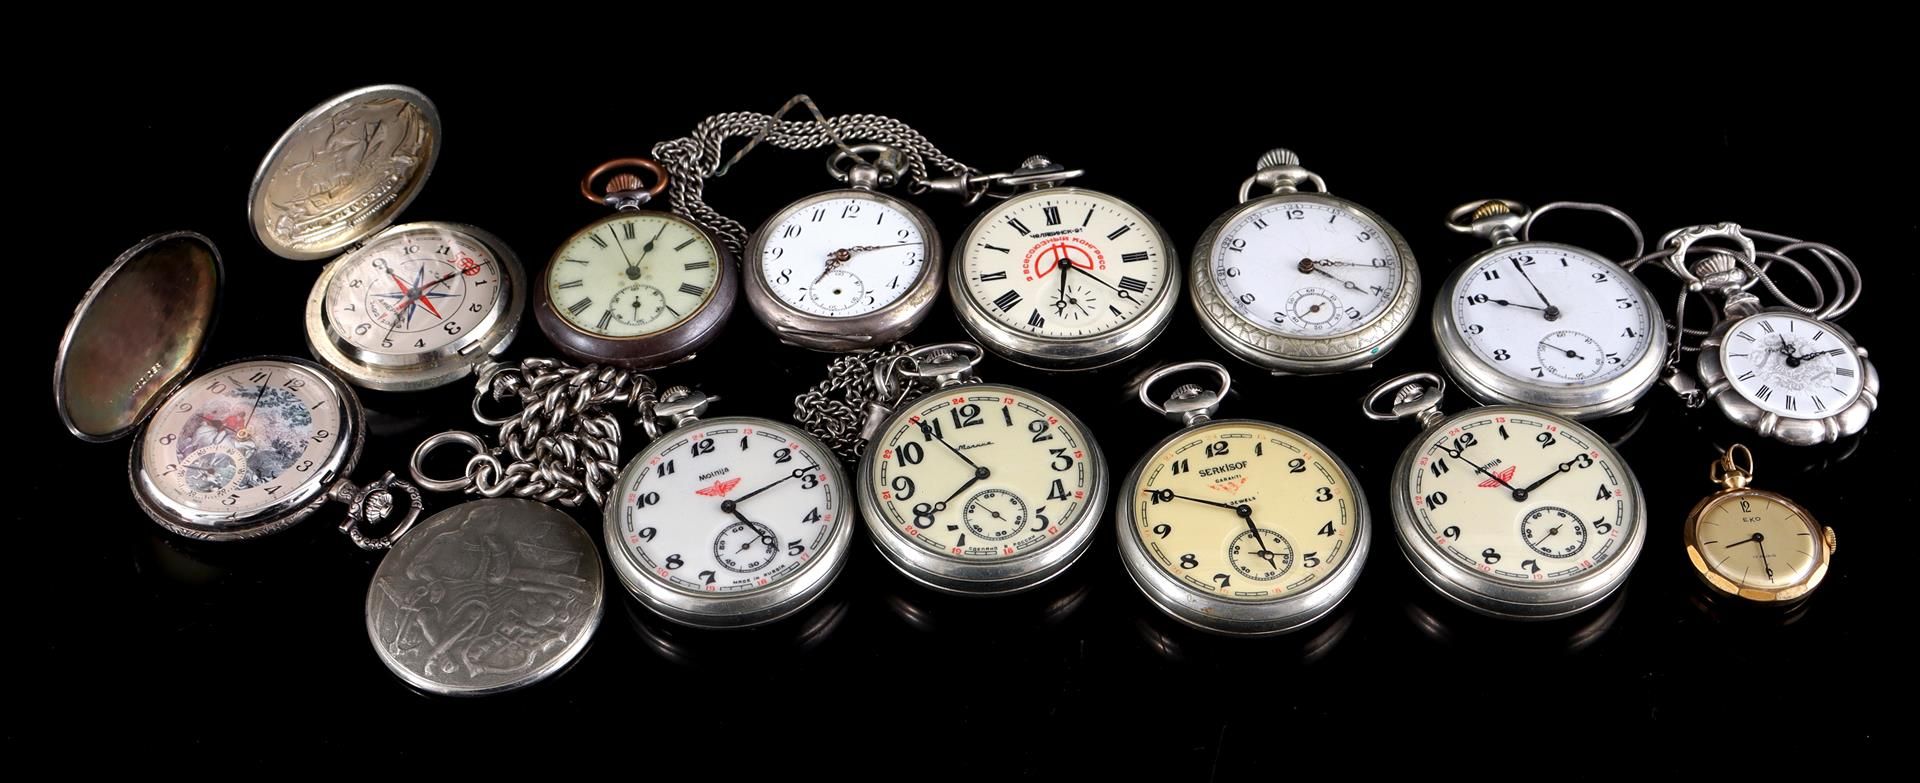 12 men's pocket watches